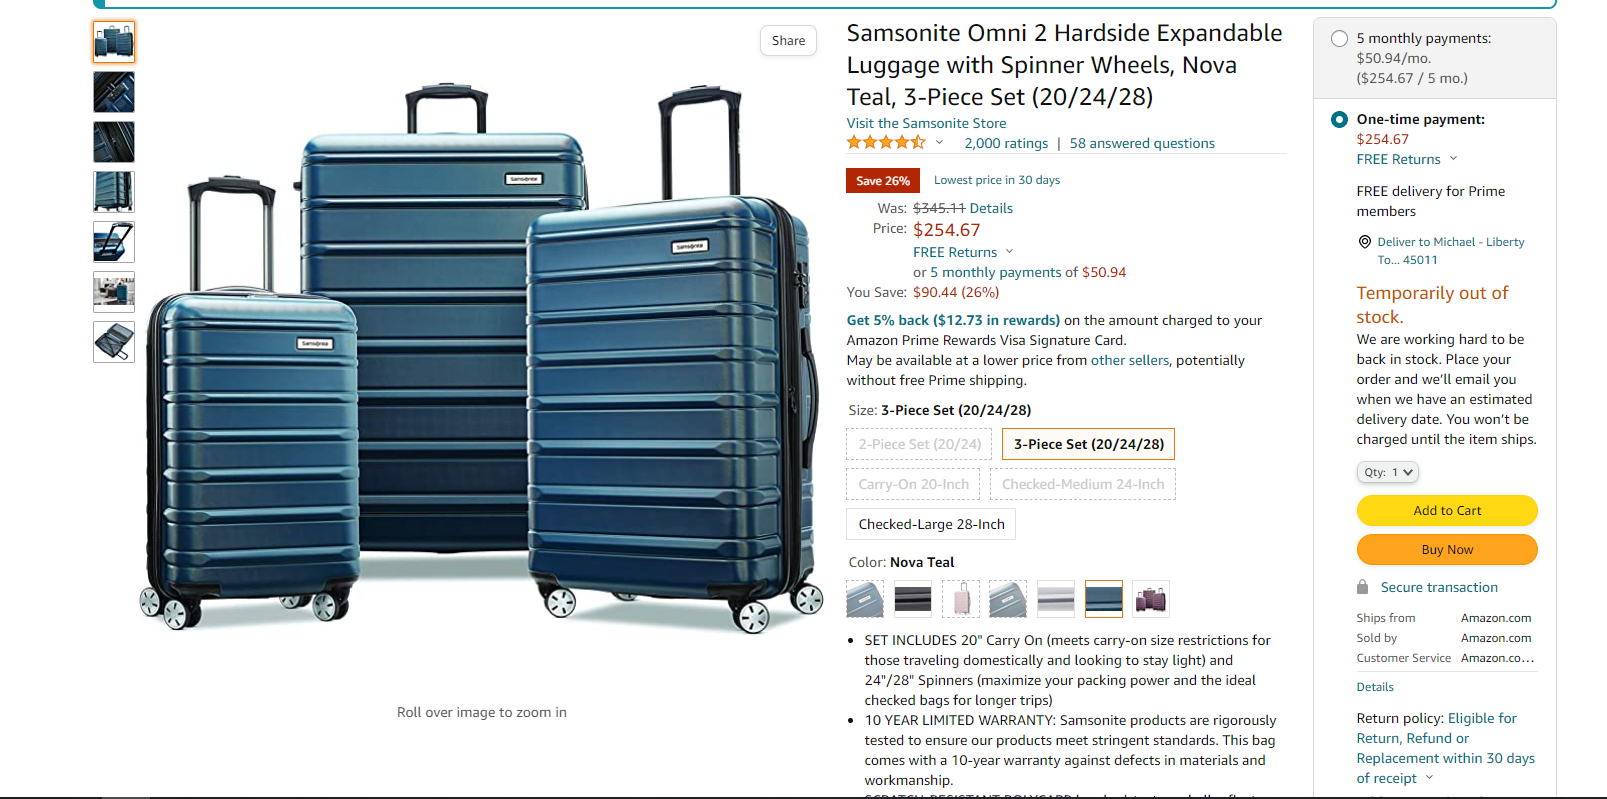 Samsonite Omni 2 Hardside Expandable Luggage with Spinner Wheels, Nova Teal, 3-Piece Set (20/24/28) $254.67 + Free Shipping - Amazon.com